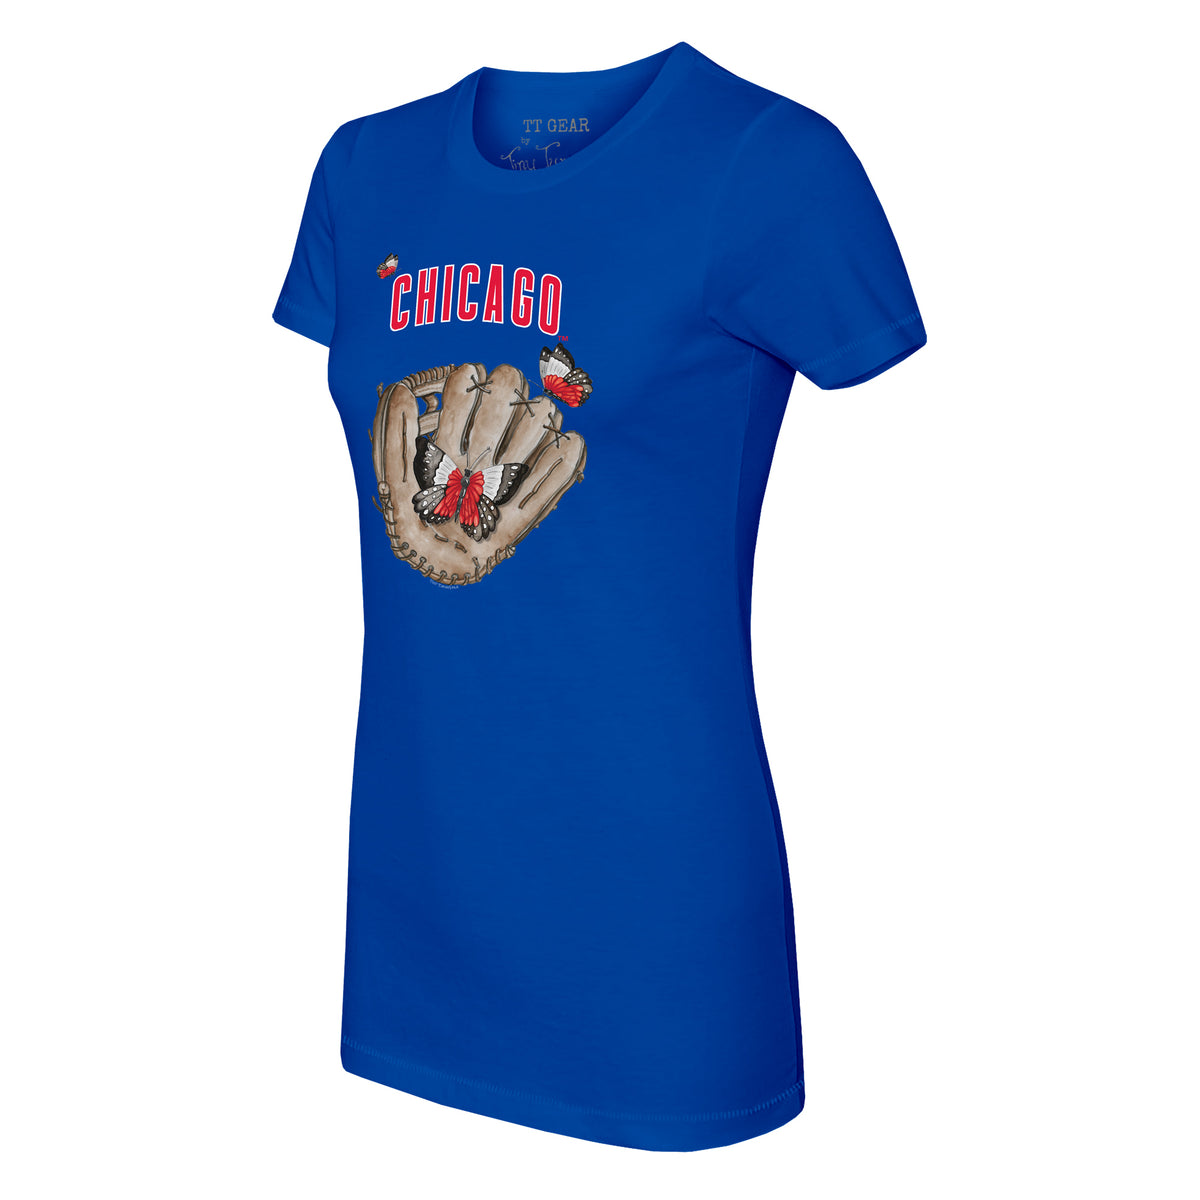 Chicago Cubs Butterfly Glove Tee Shirt